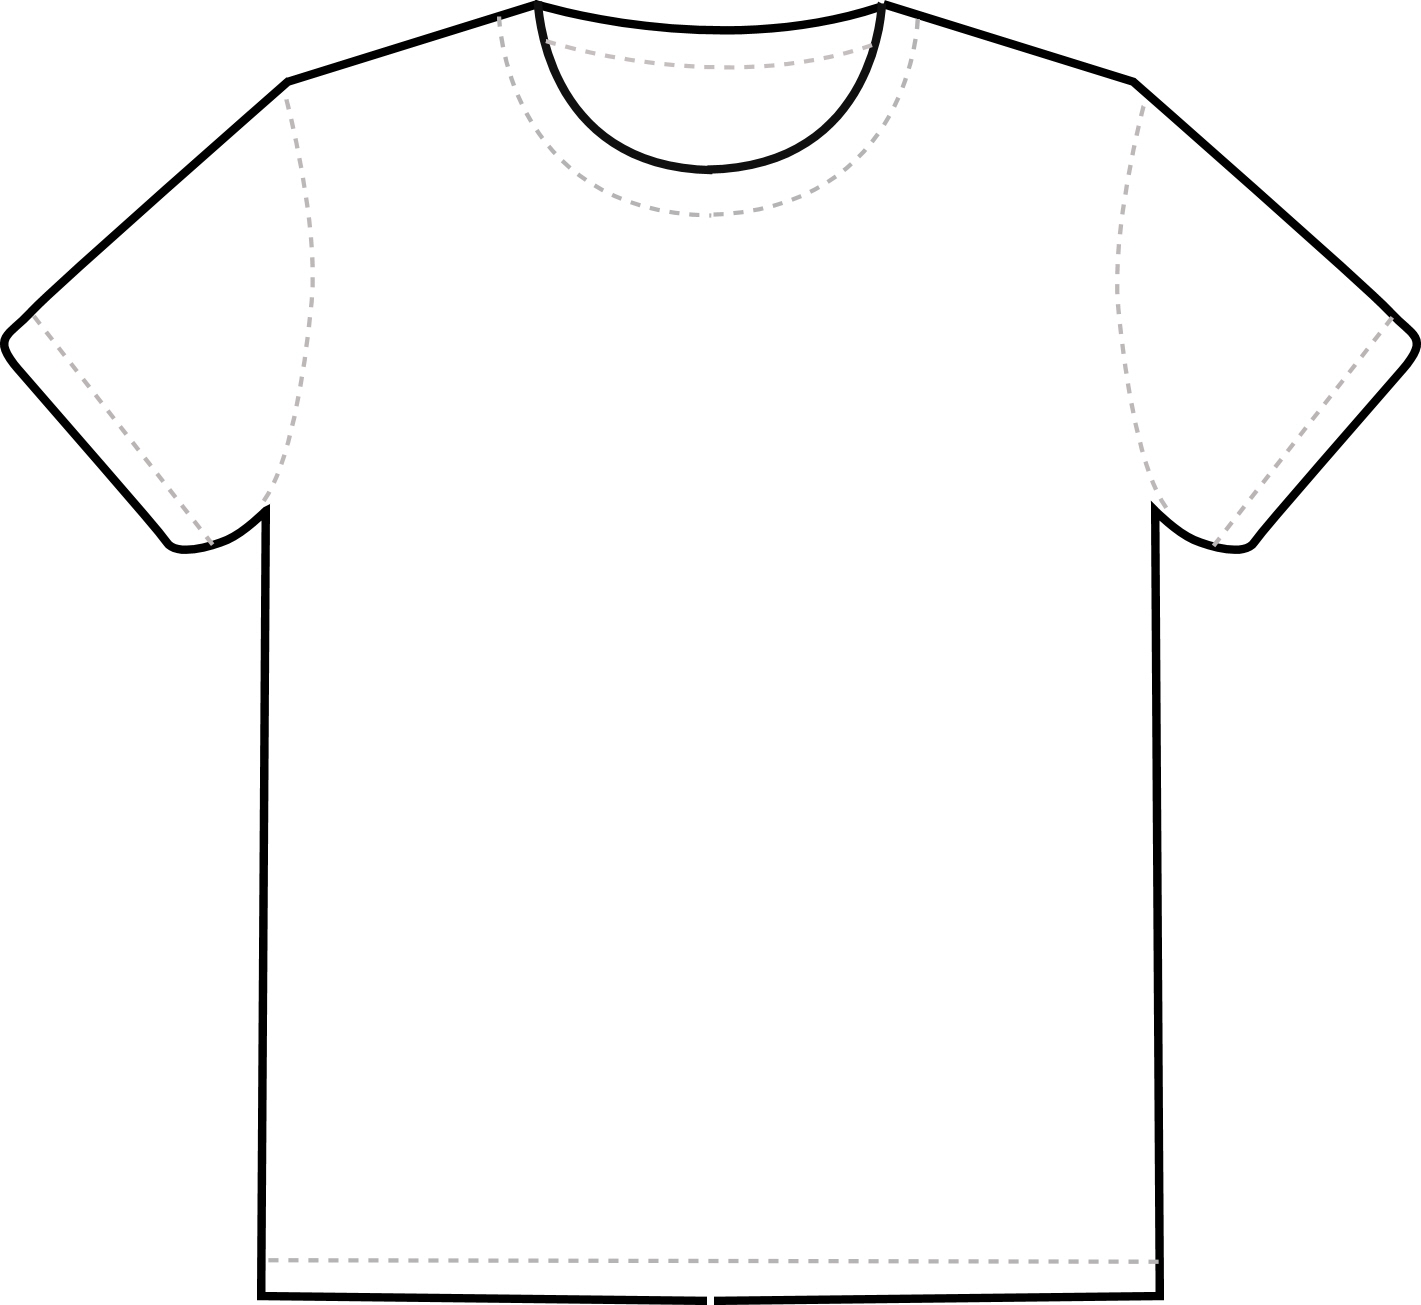  T  Shirt  Template  Illustrator